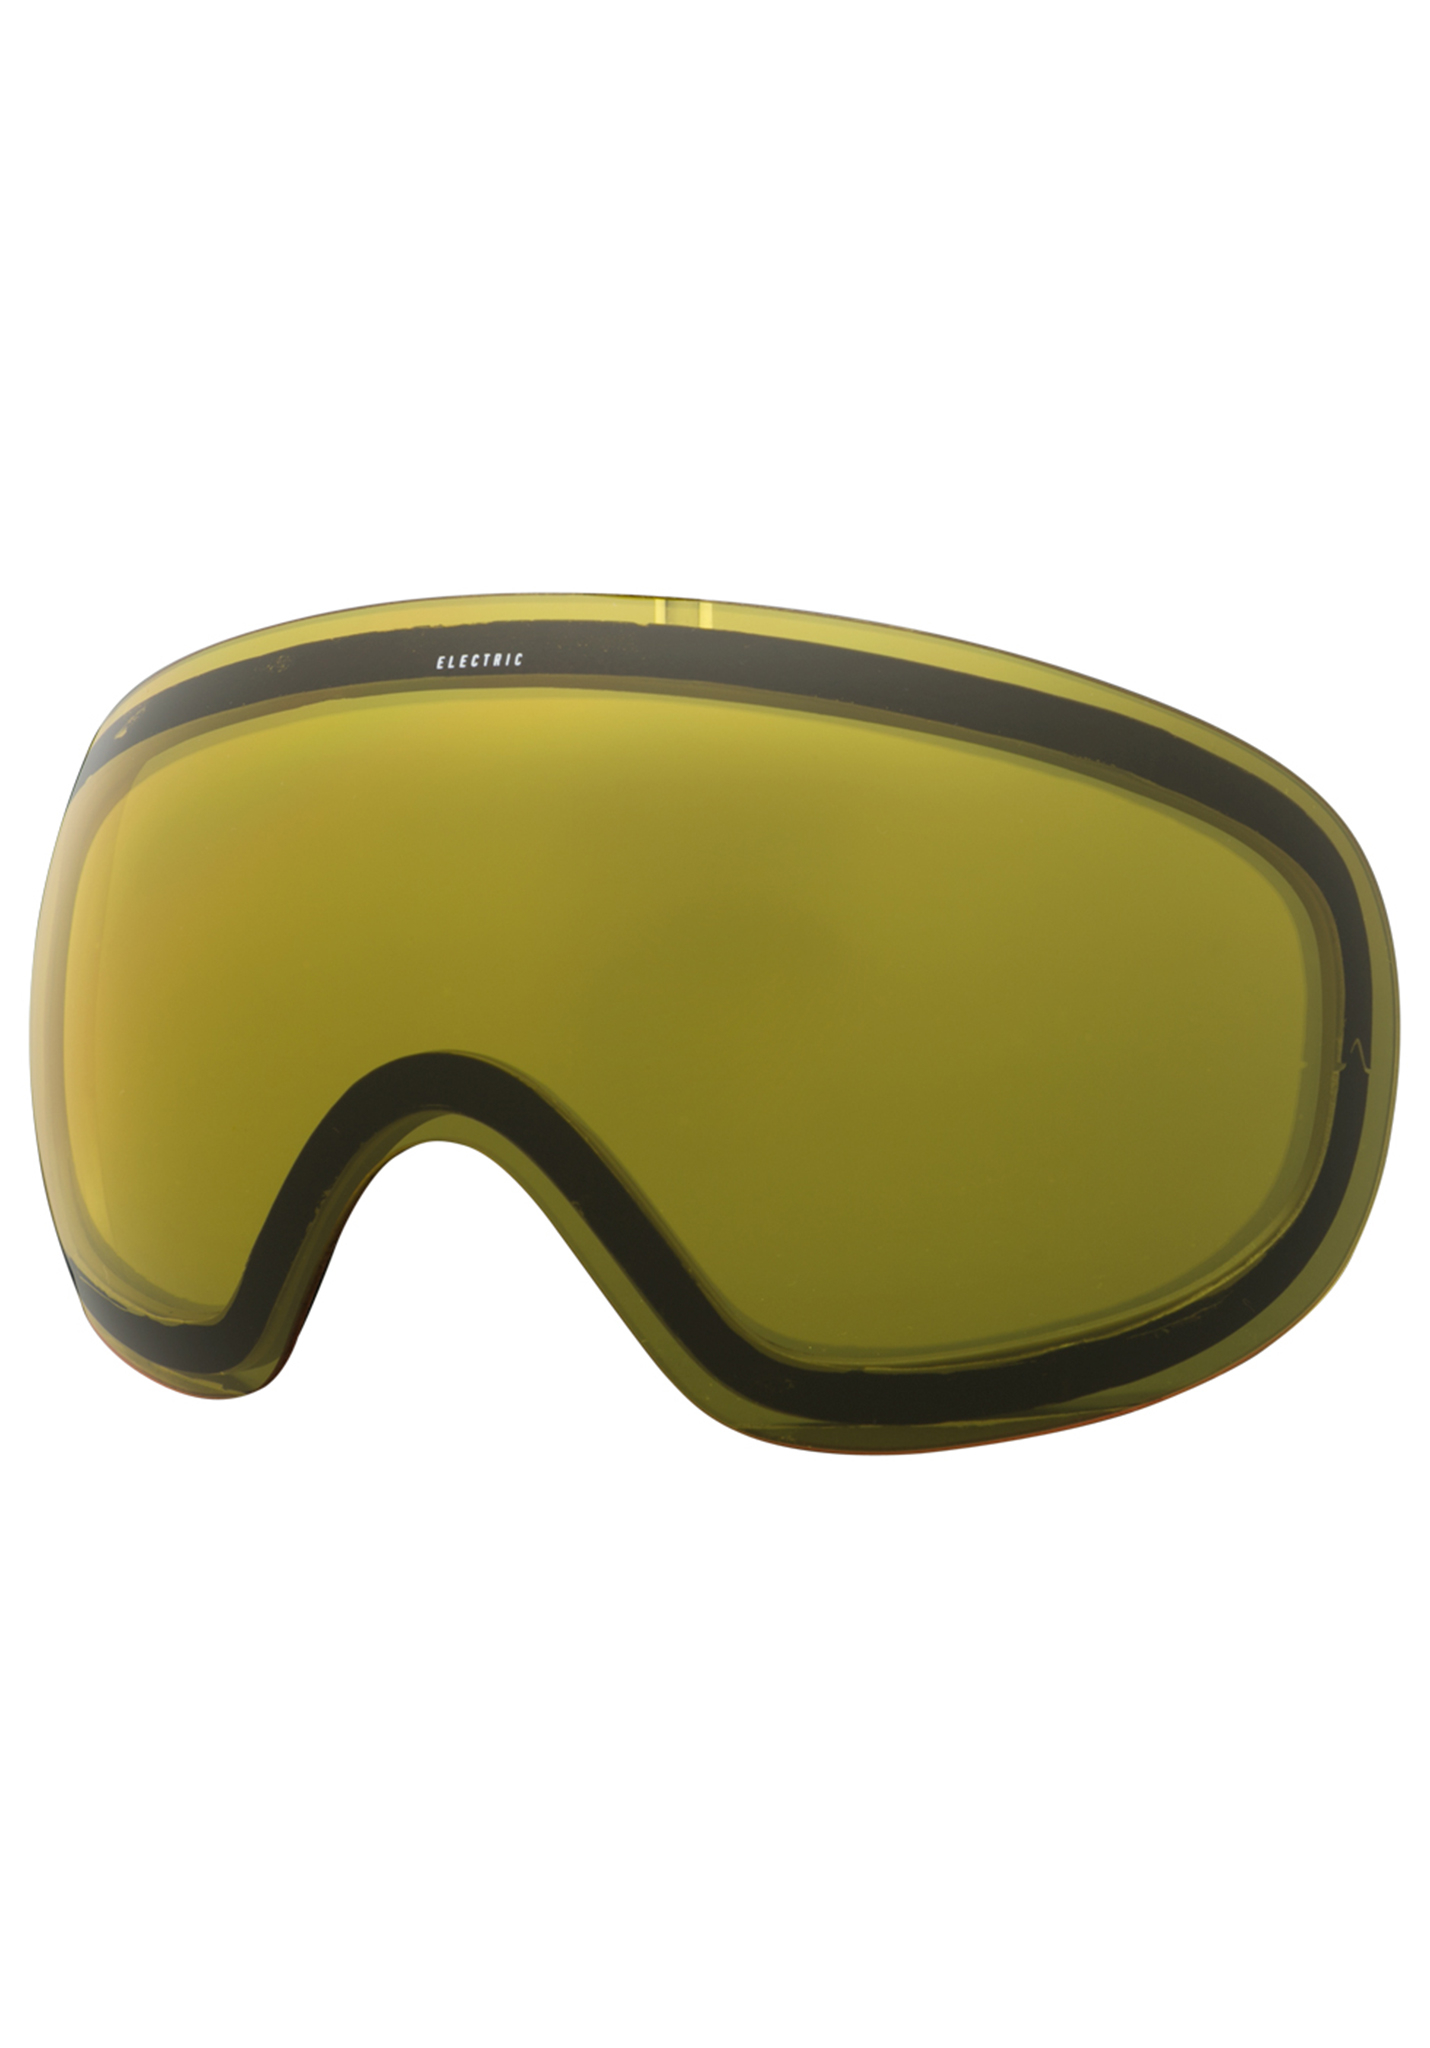 Electric EGV Lens Snowboardbrillen Ersatzgläser gelb i One Size